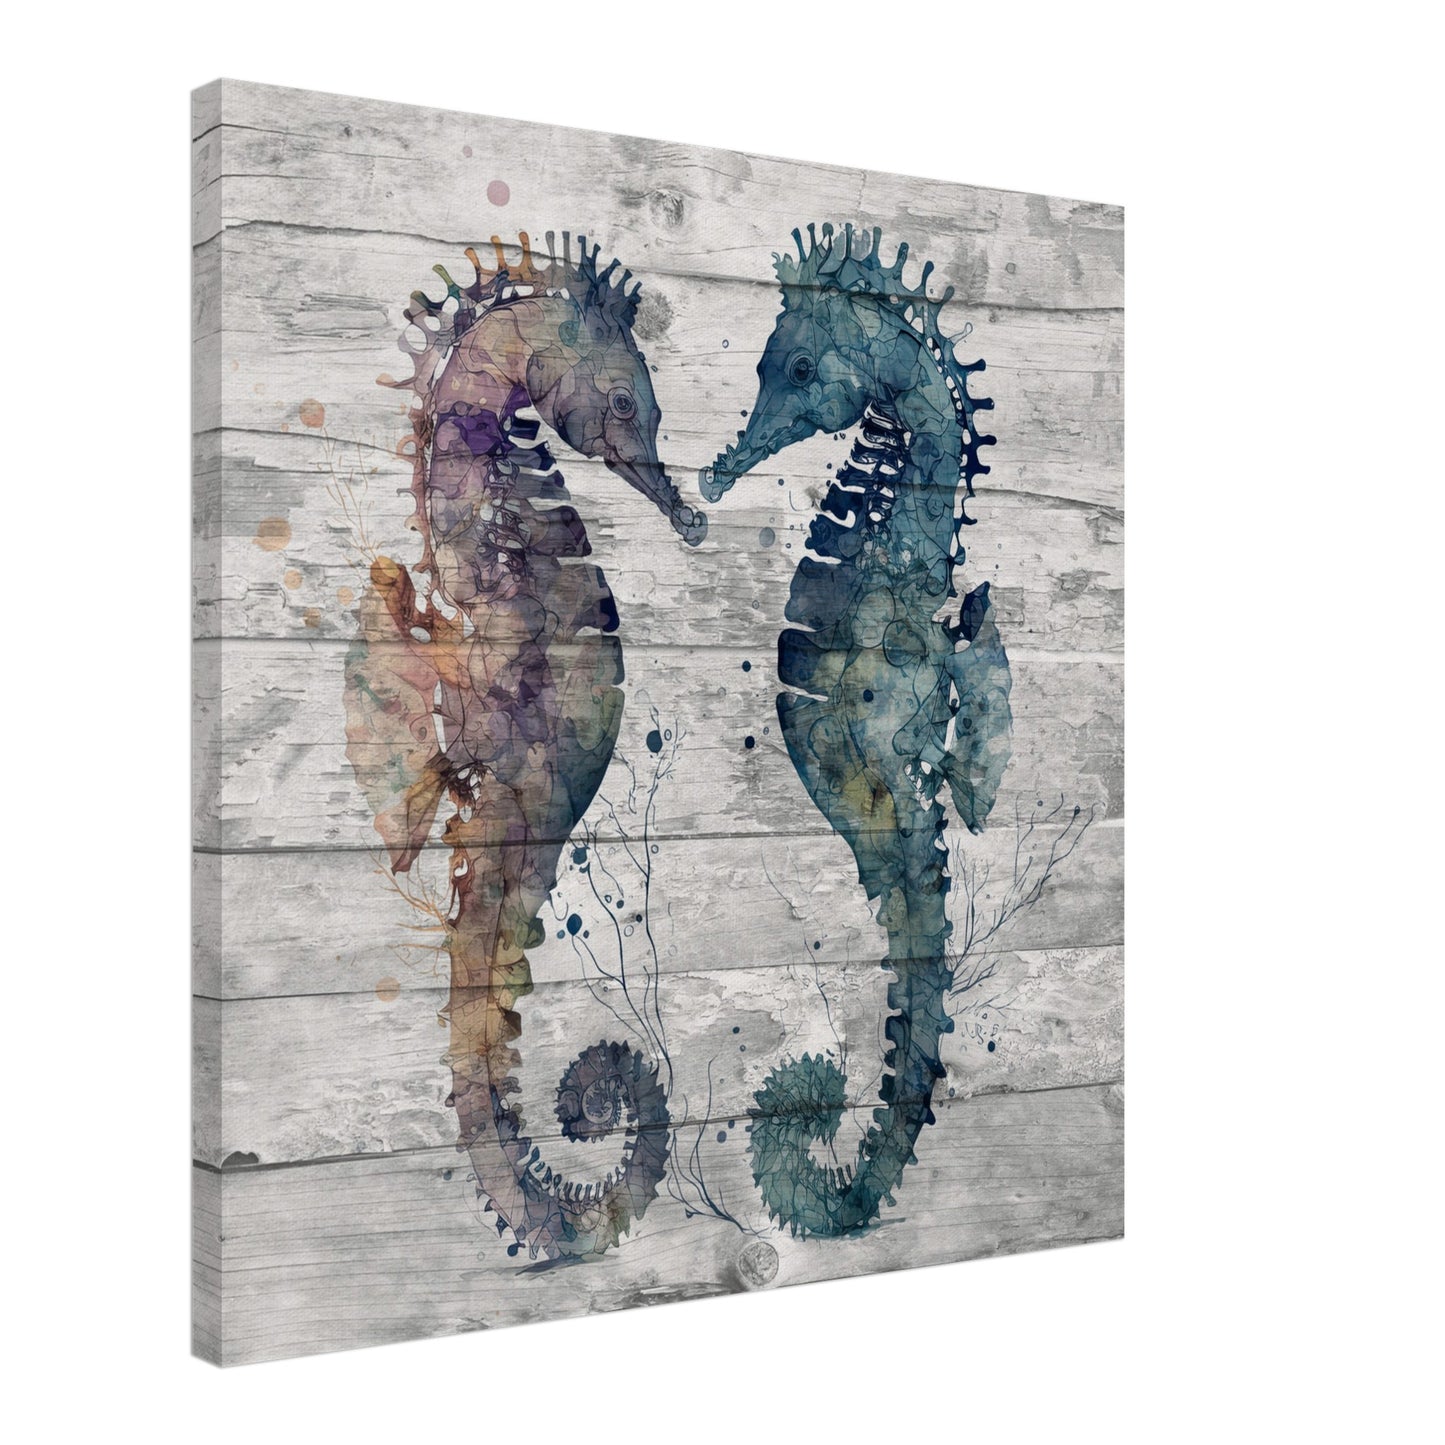 Two Tone  Duo Seahorses Canvas Wall Print Caribbean Rays